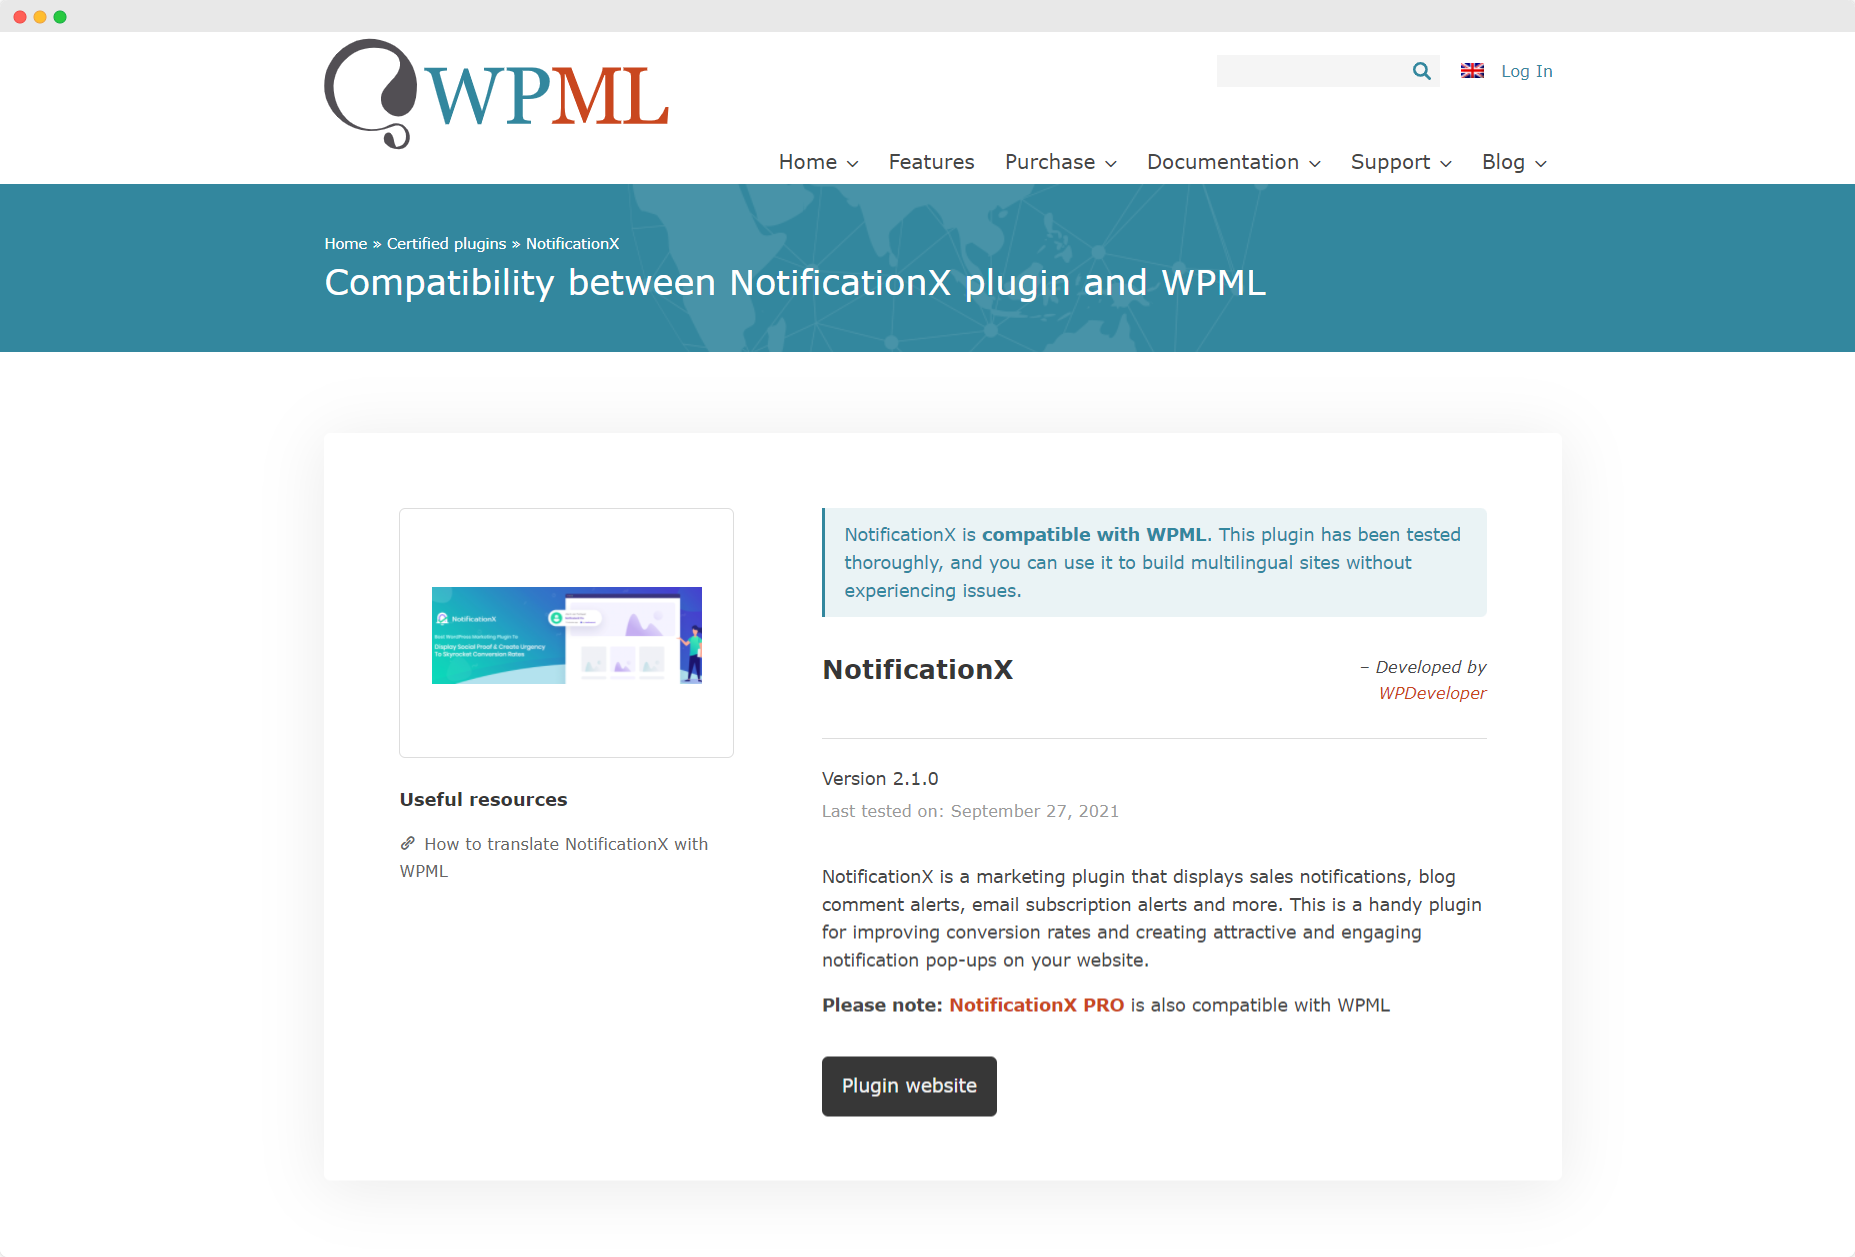 [NEU] NotificationX ist jetzt mit WPML 1 kompatibel